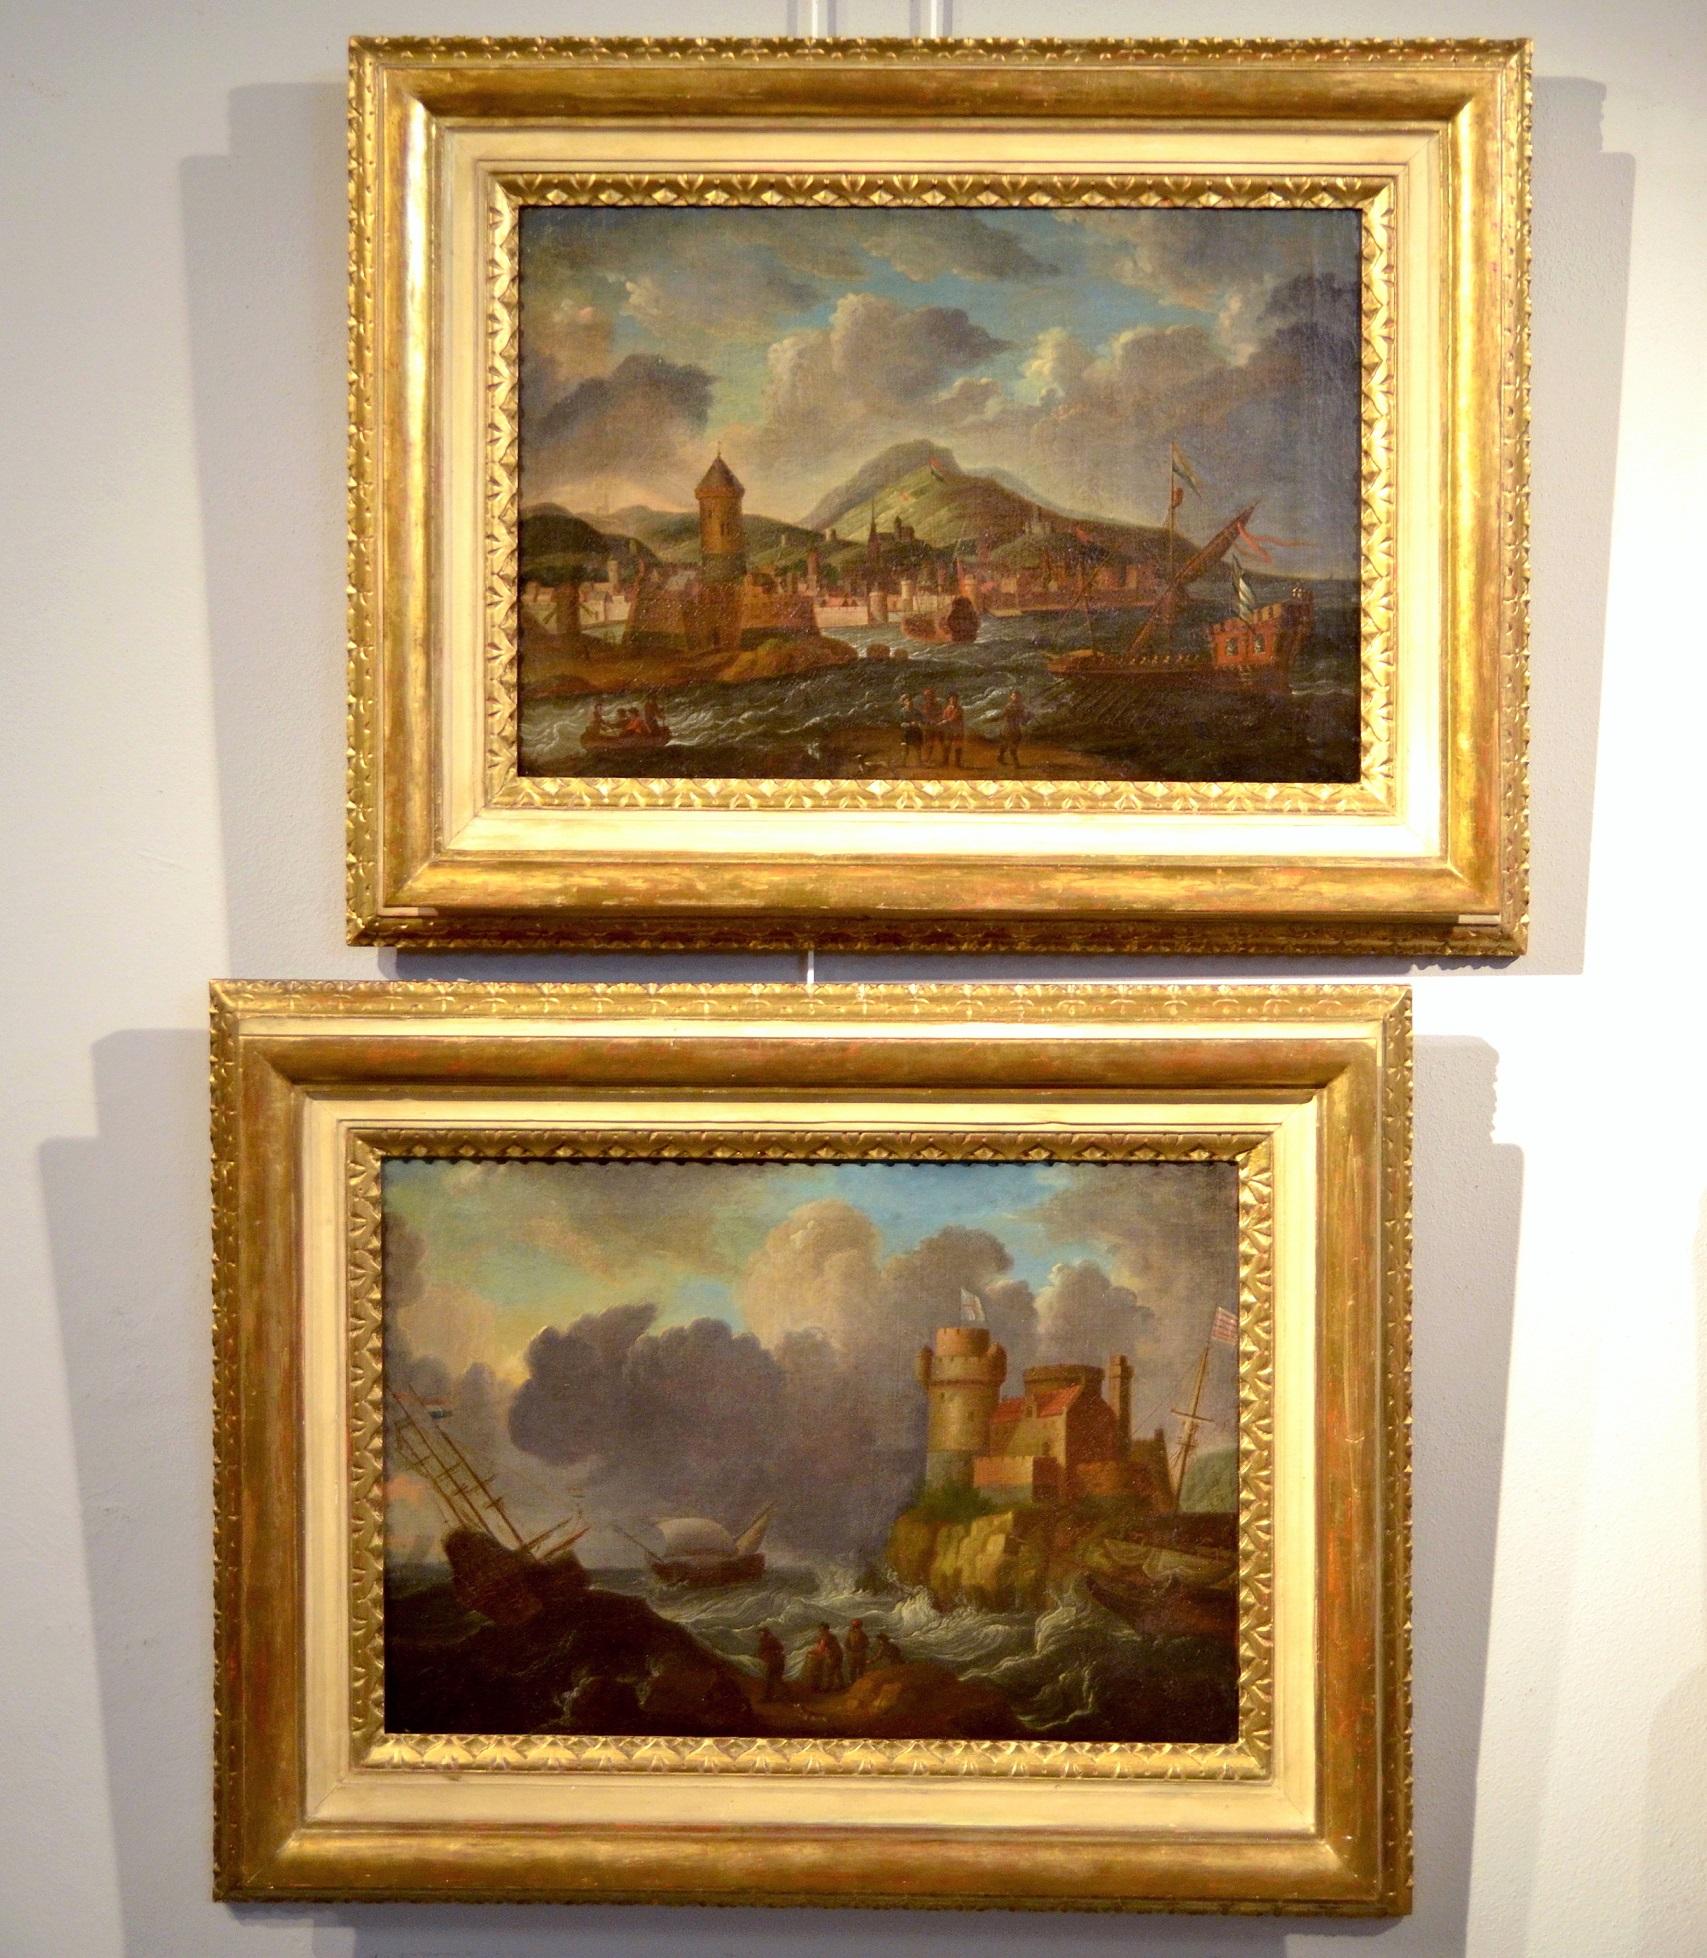 Paint Oil on canvas 17th Century Italy Mediterranean Landscapes Marina Flandre